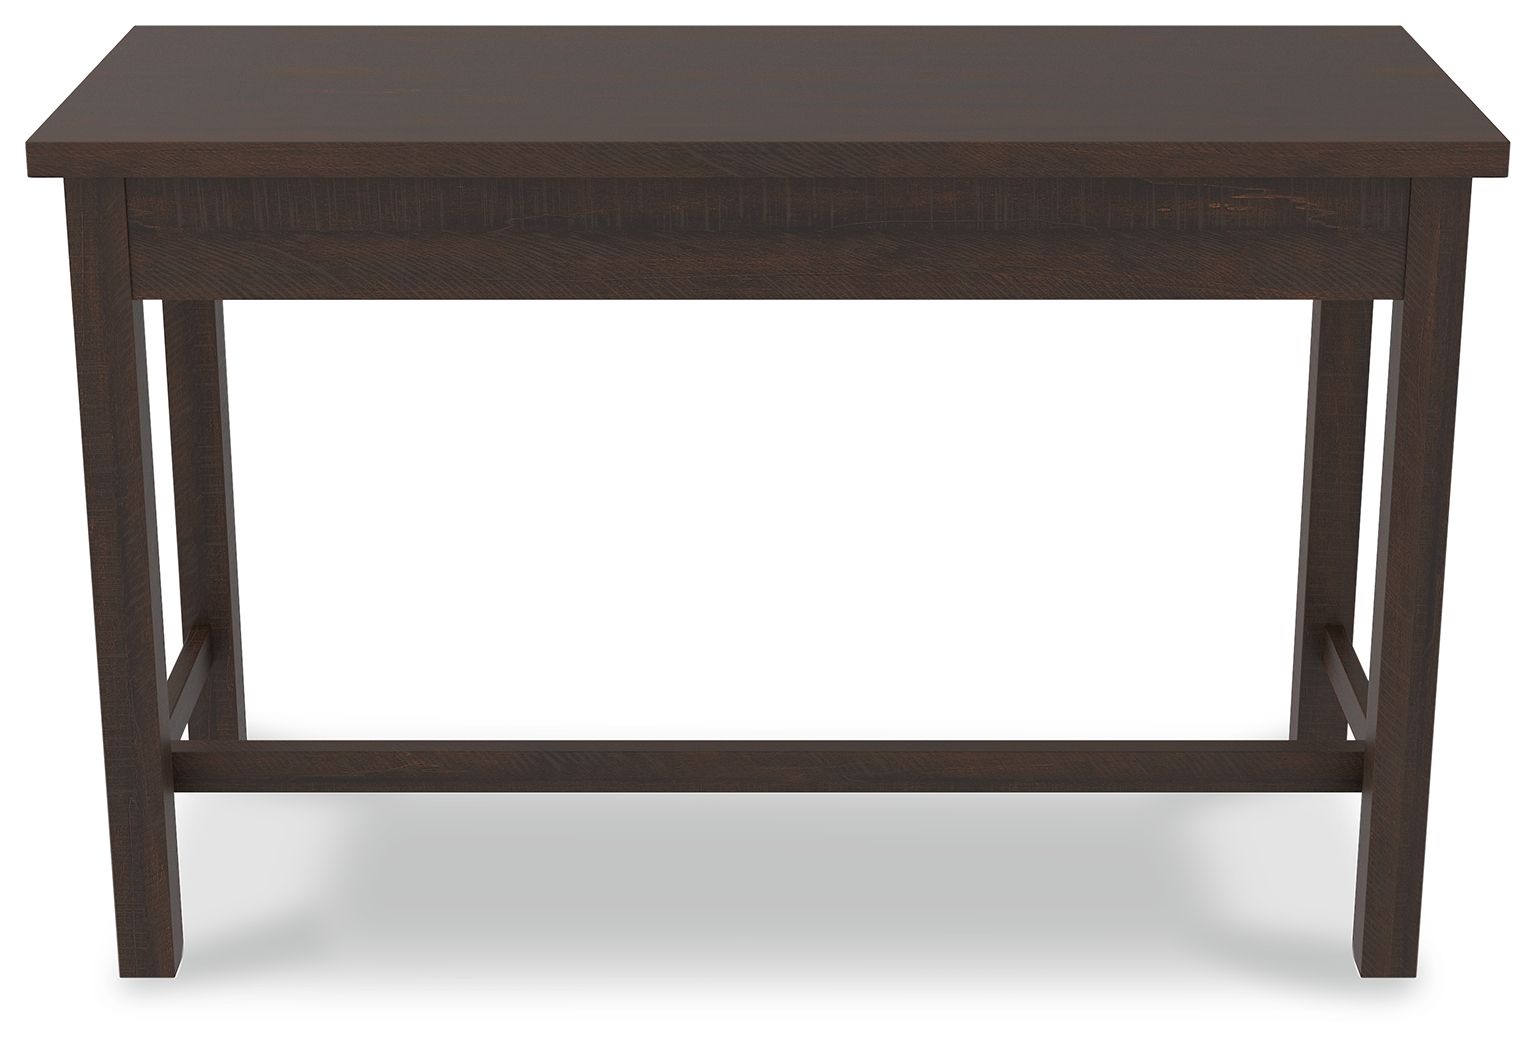 Camiburg - Warm Brown - Home Office Desk - Standalone